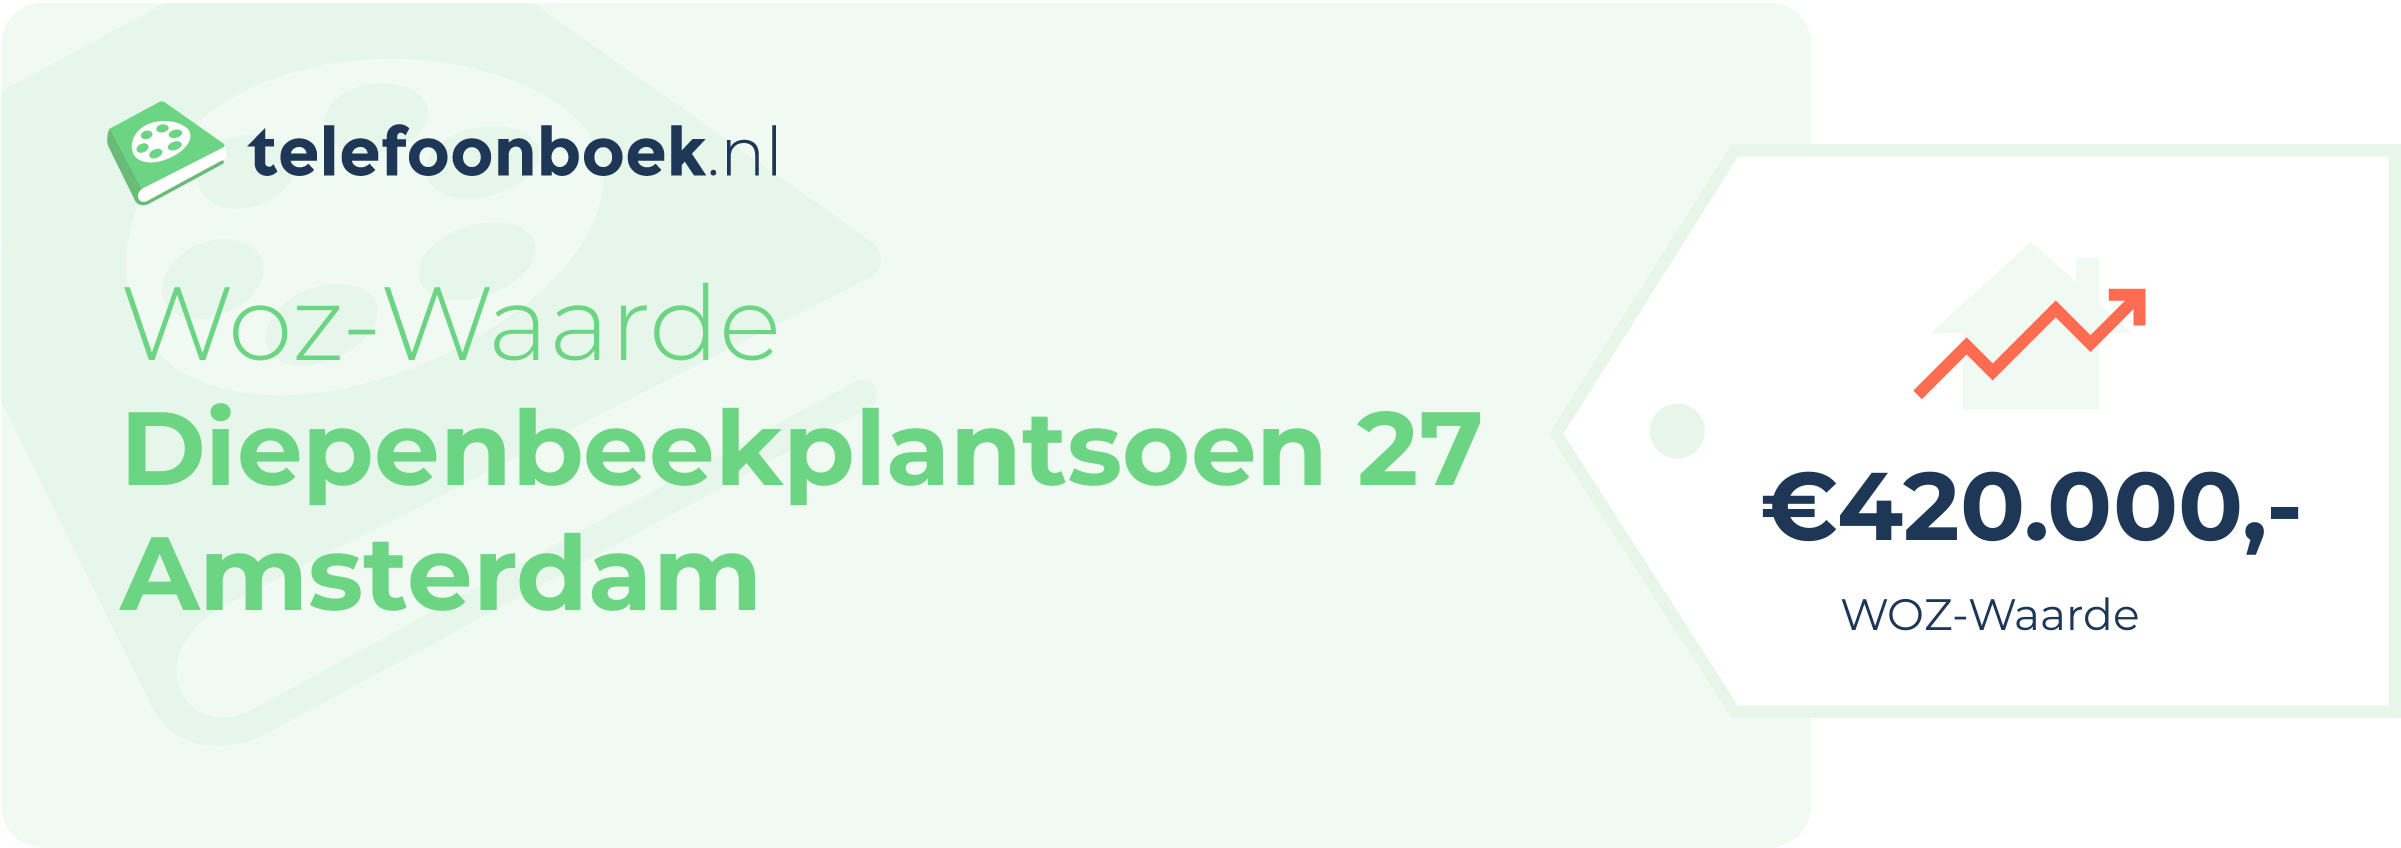 WOZ-waarde Diepenbeekplantsoen 27 Amsterdam